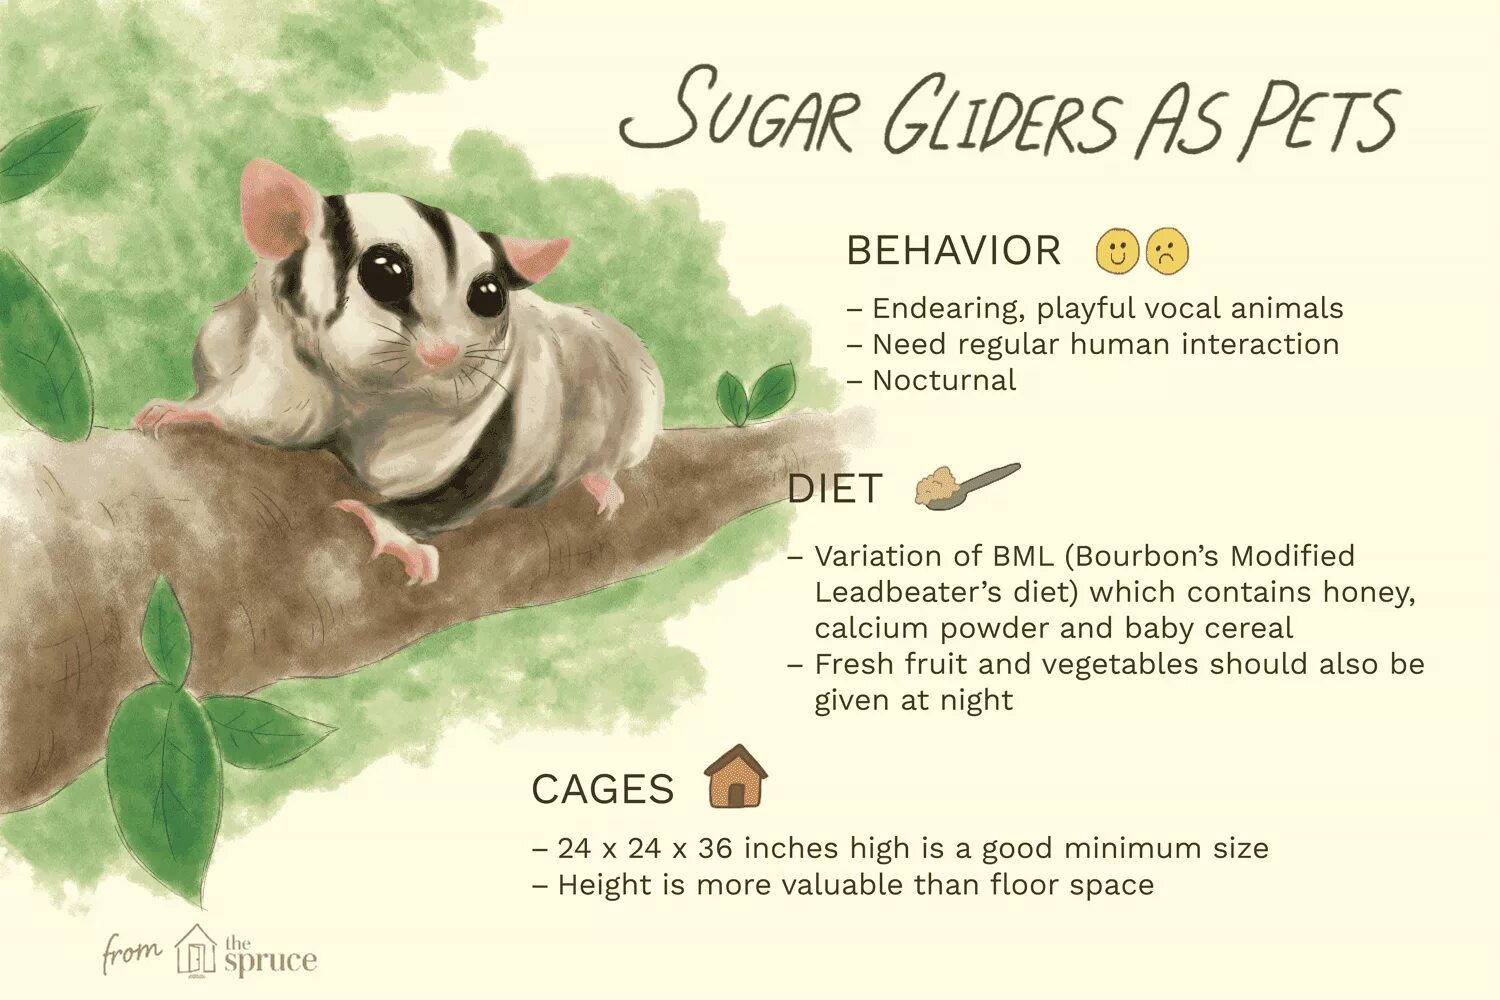 Keeping pets перевод. Sugar Glider перевод. Baby Sugar Glider animals. Glider перевод. Sugar Glider животное перевод.